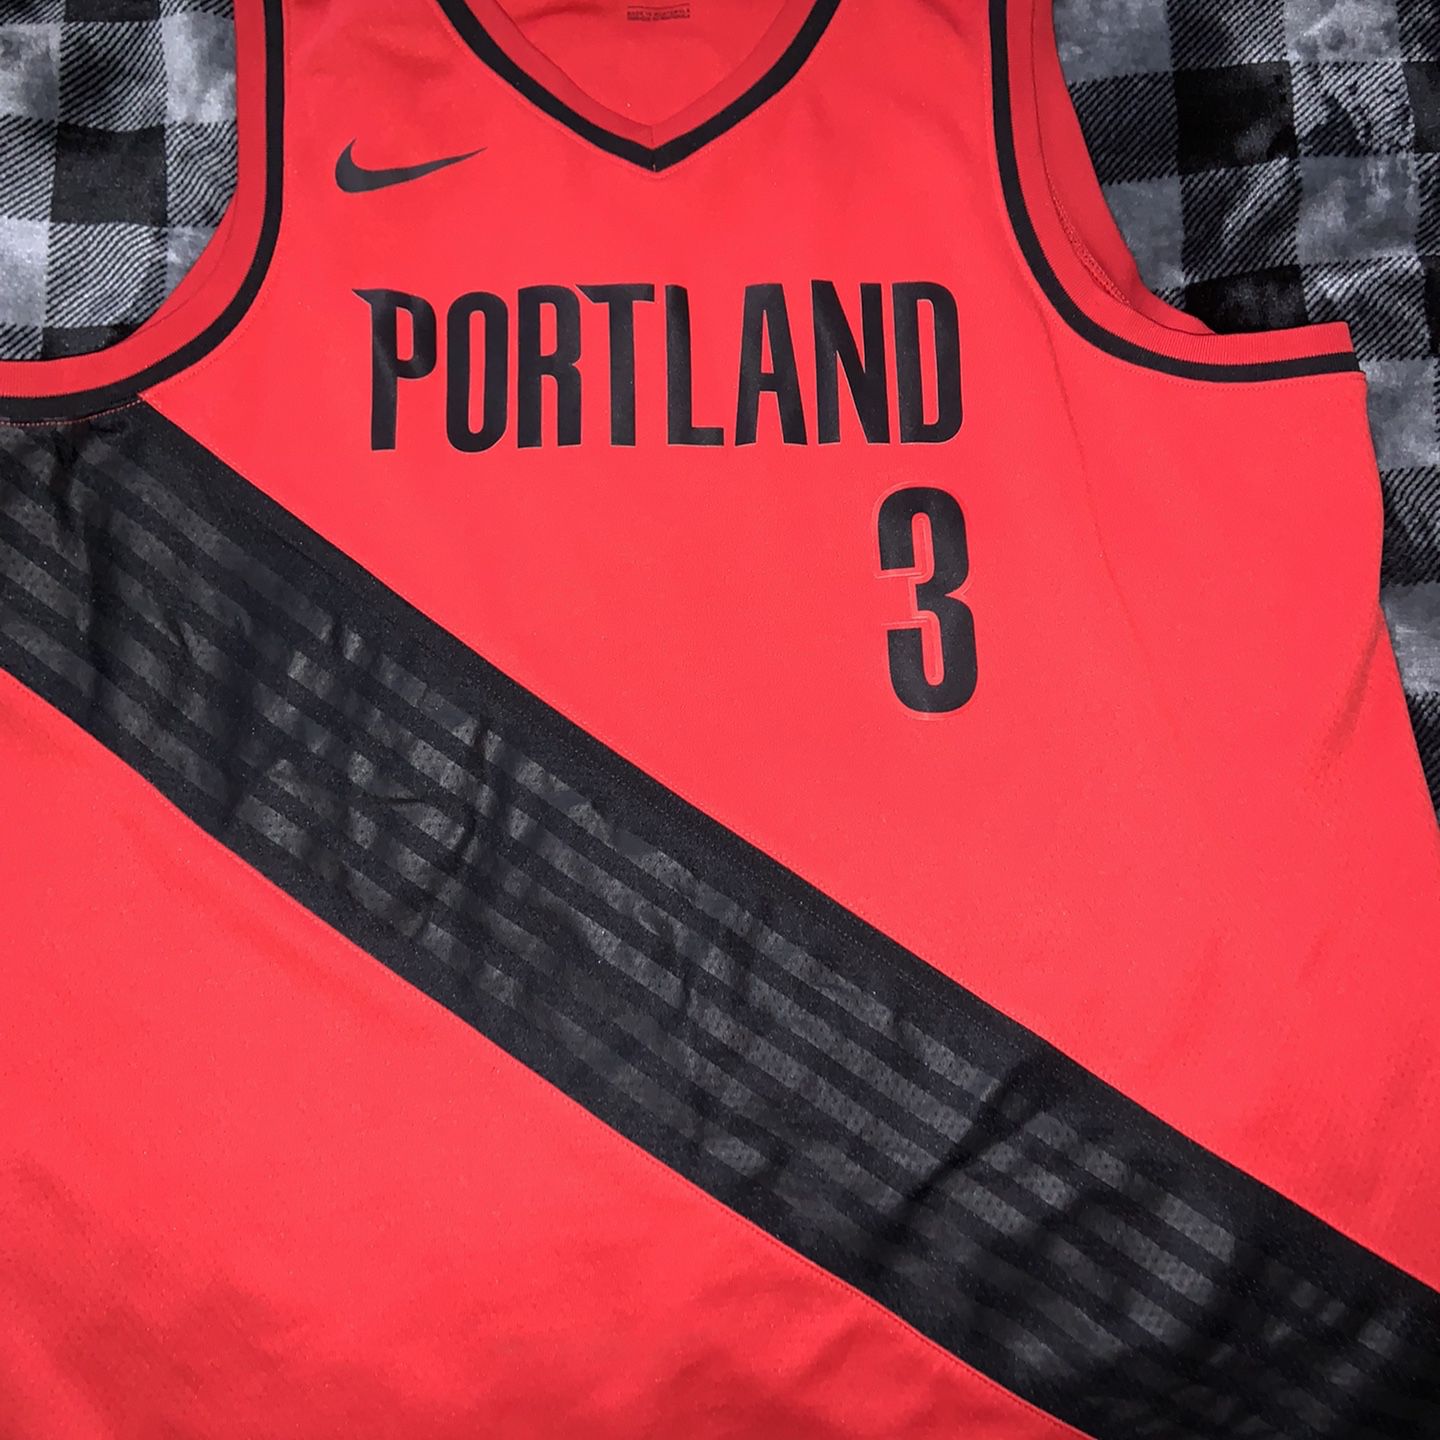 Portland Trail blazers jersey for Sale in Sherwood, OR - OfferUp